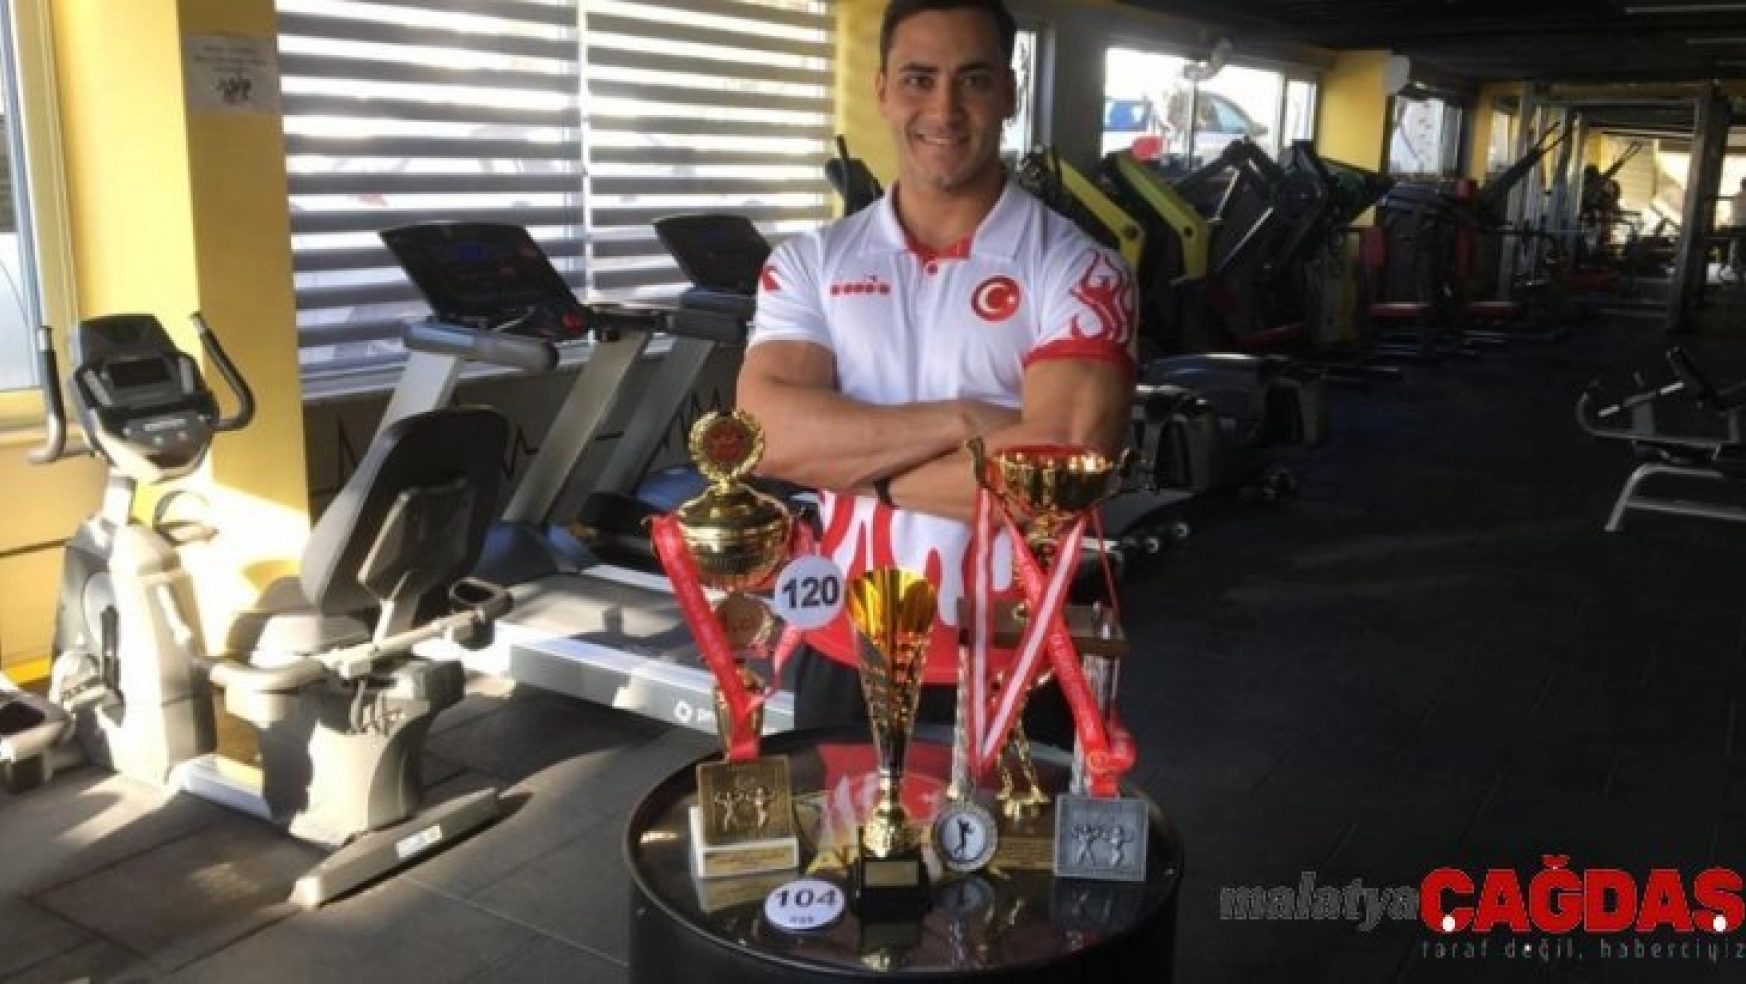 Antalyalı milli sporcu Şakir Yalın, dünya 6.'sı oldu